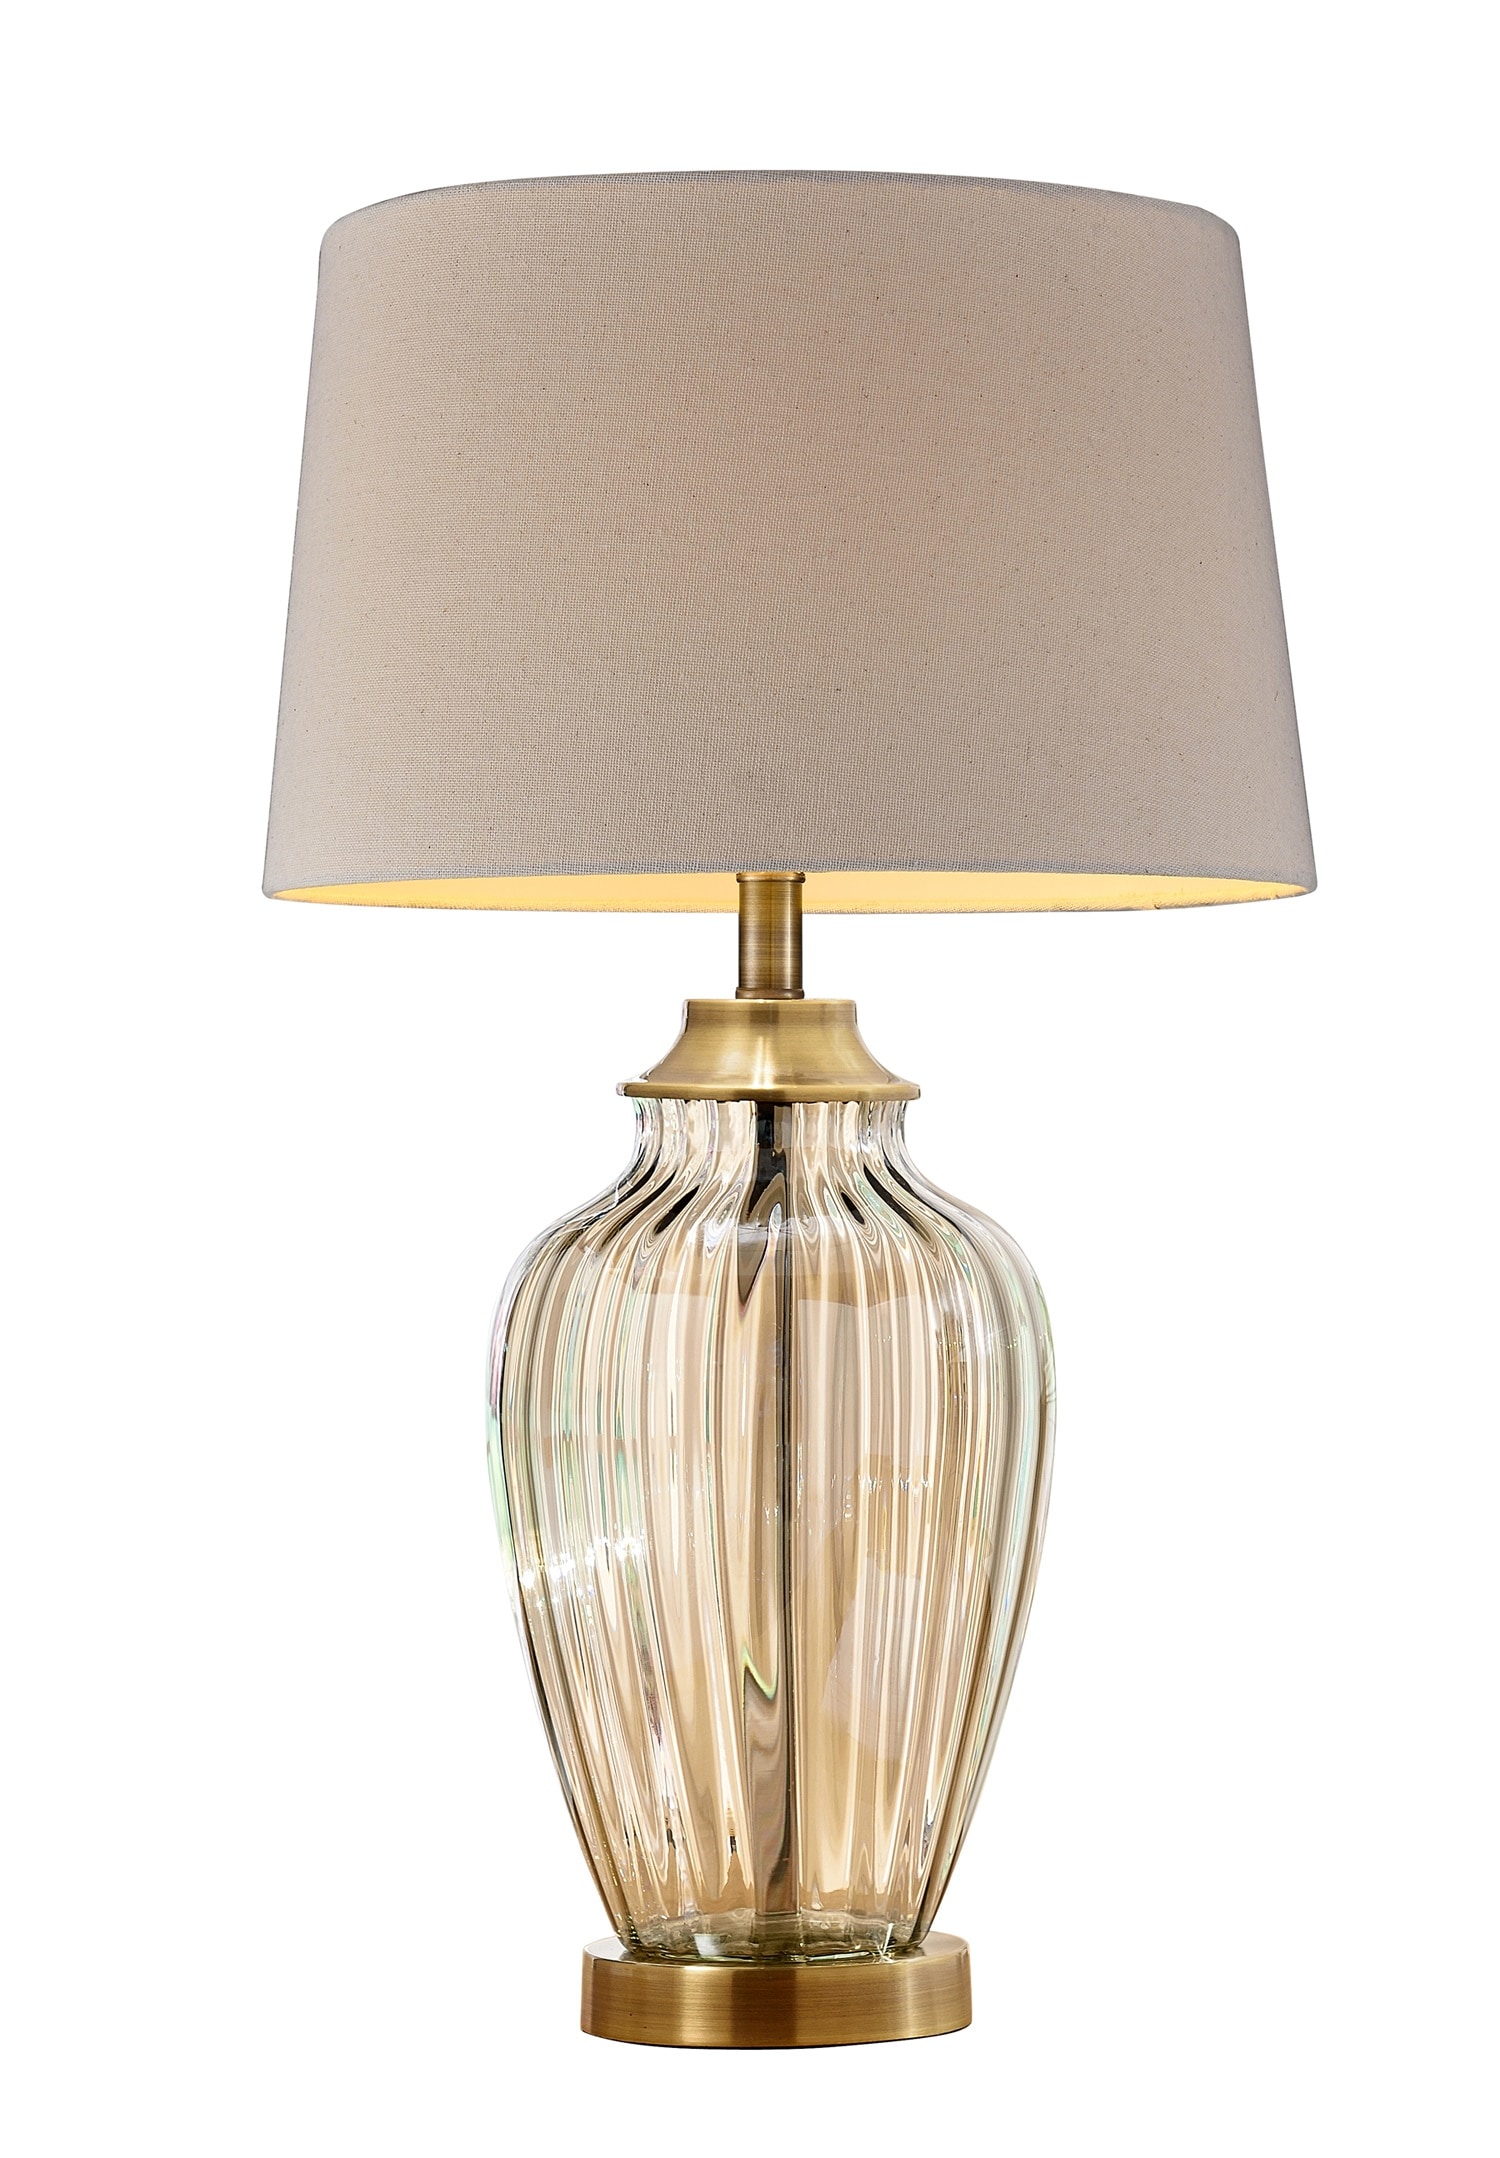 Ore International K-9142T Simple Elegance 30.5-Inch Table Lamp